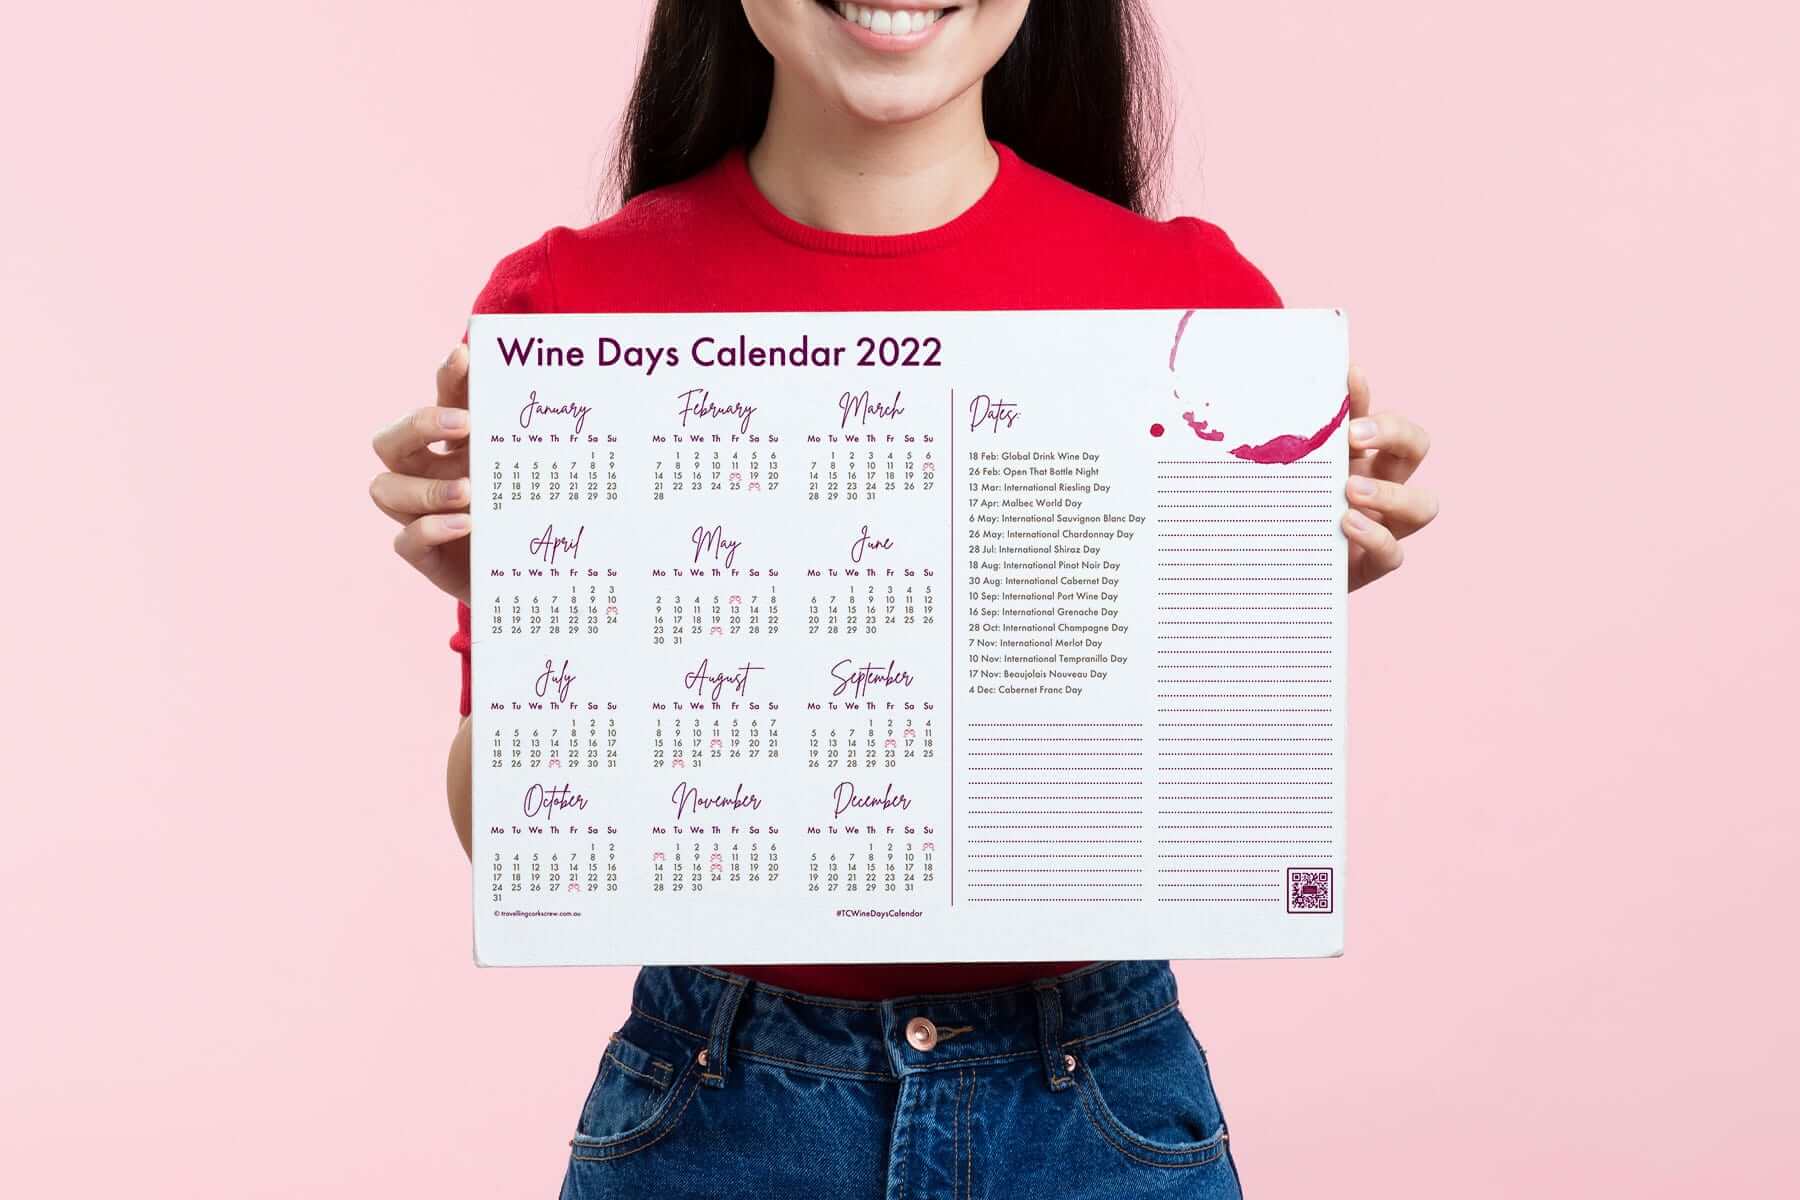 Lady holding the TC Wine Days Calendar 2022